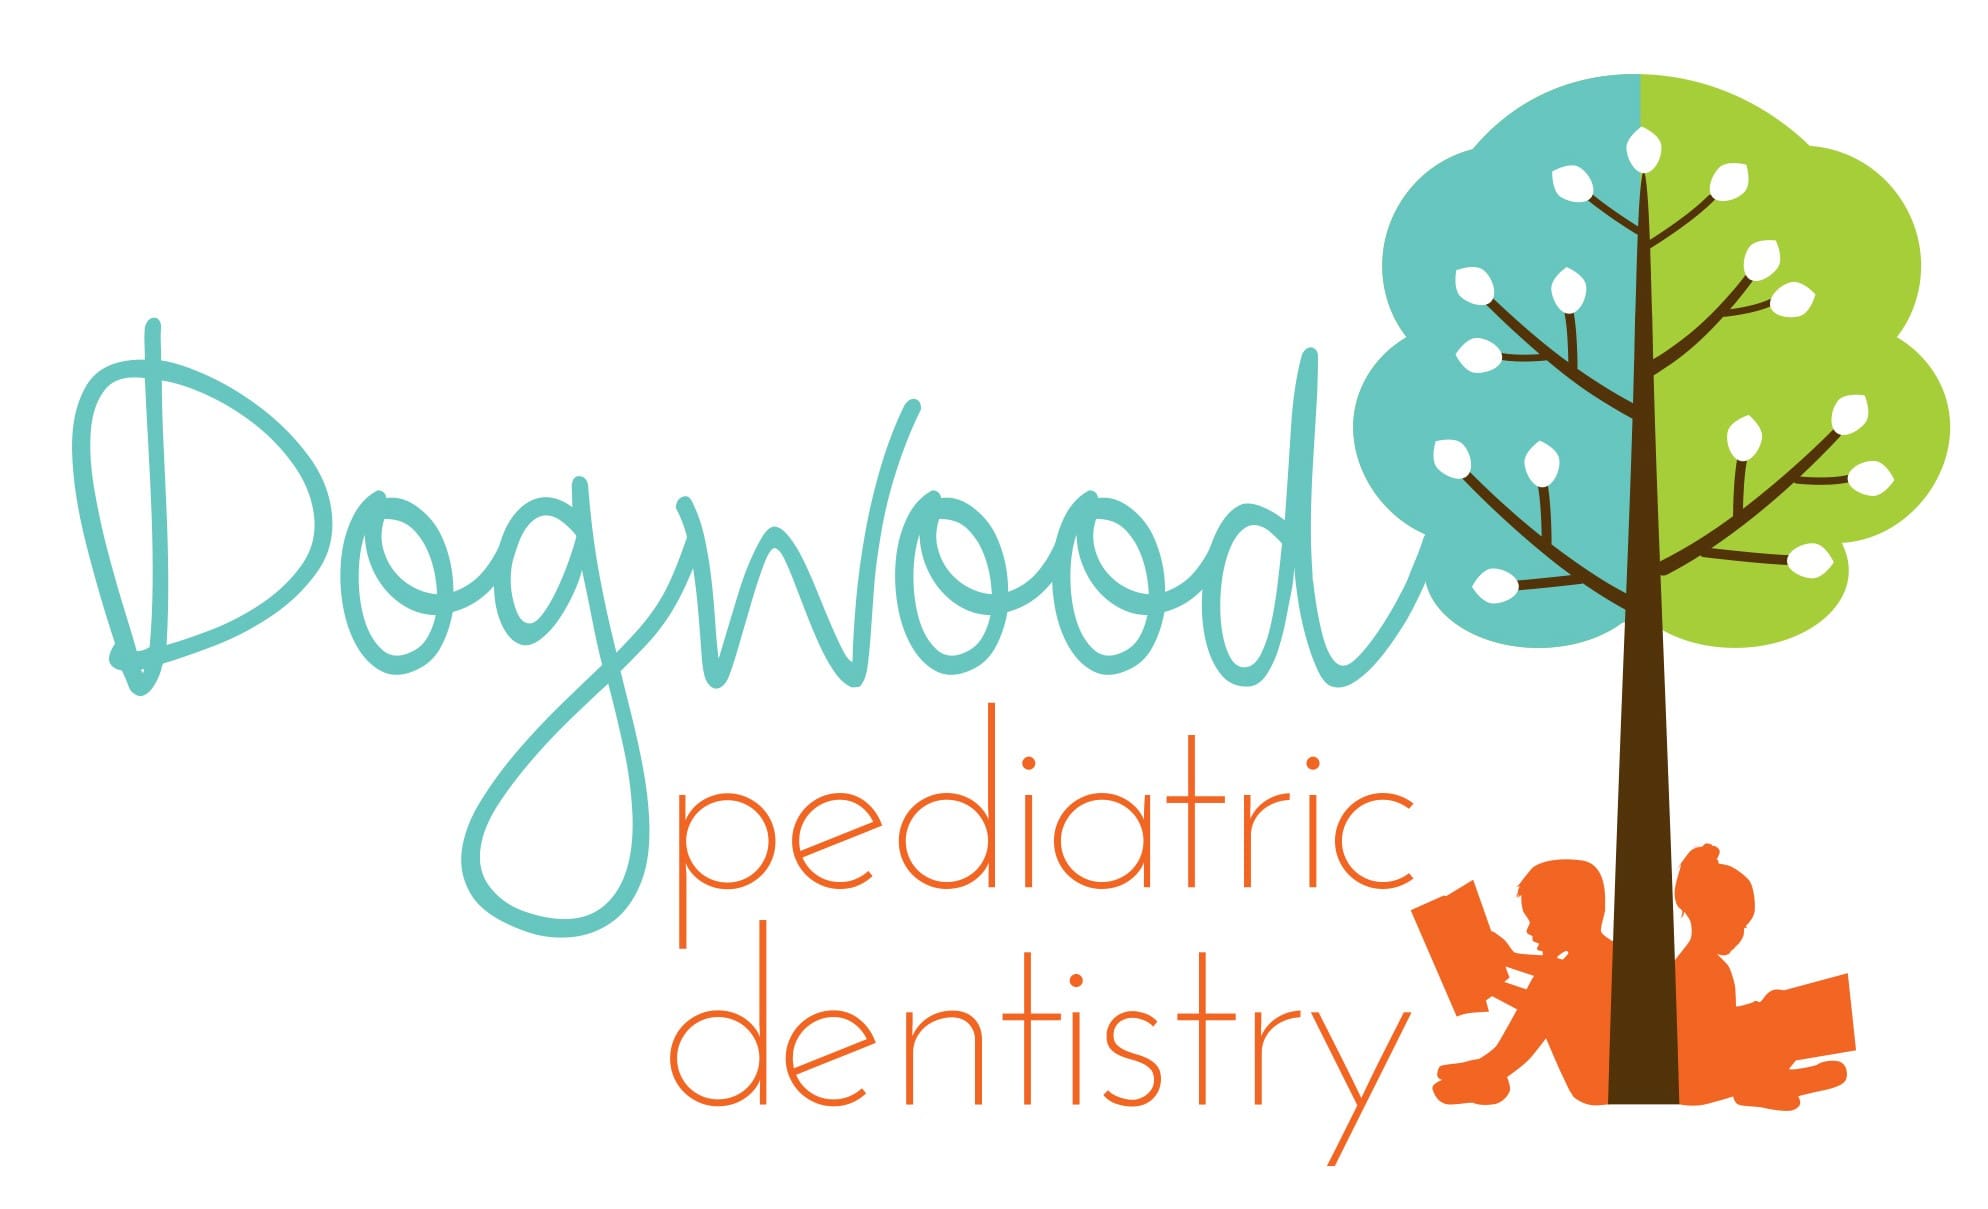 dogwood pediatric dentistry logo